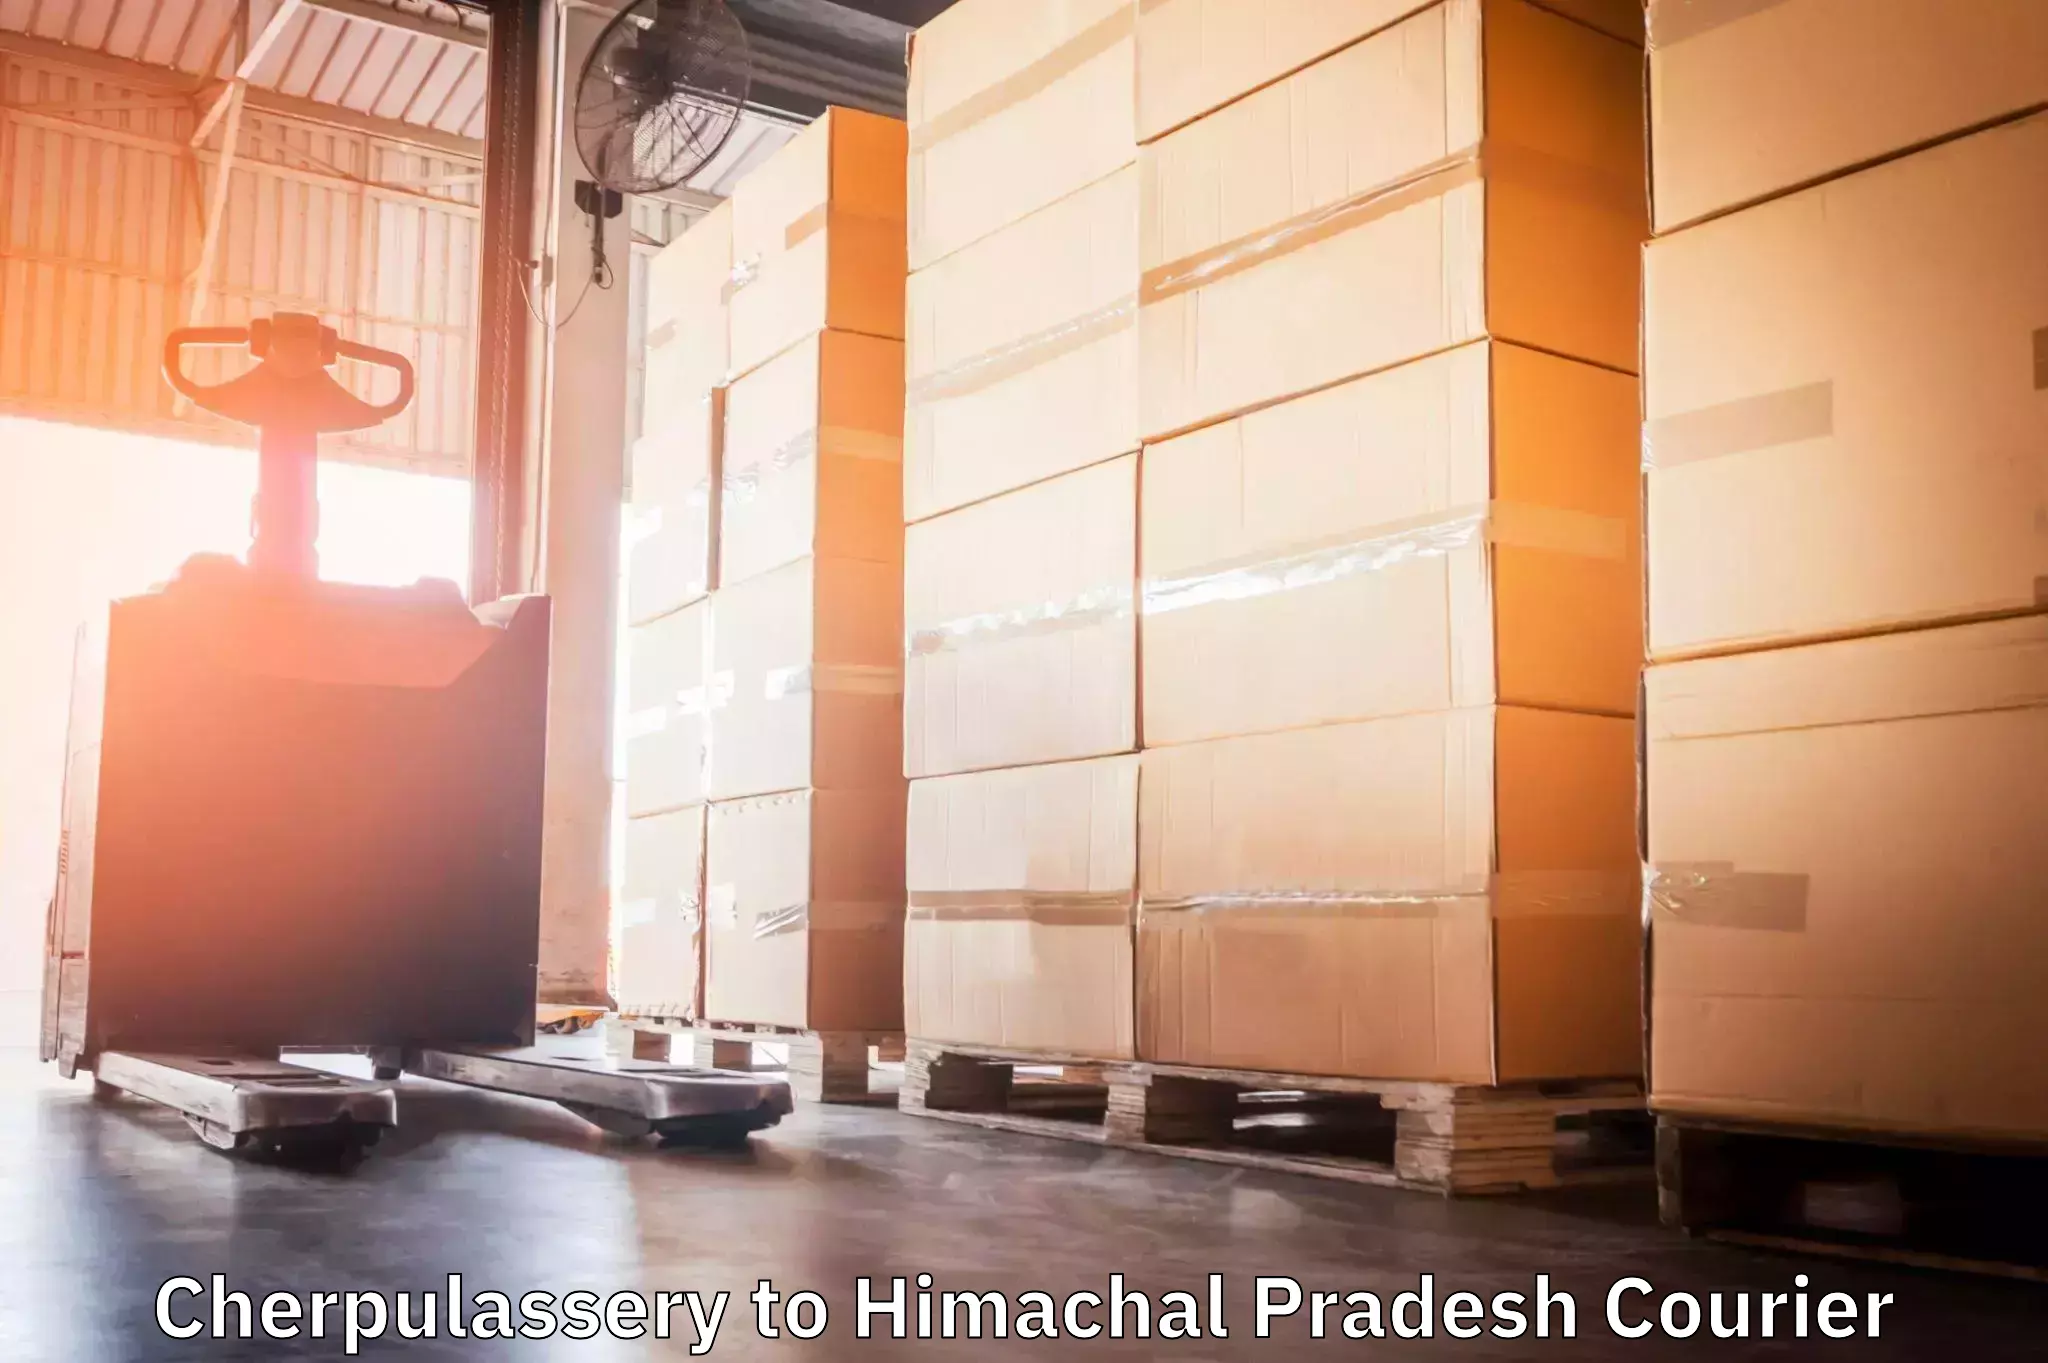 State-of-the-art courier technology Cherpulassery to Himachal Pradesh